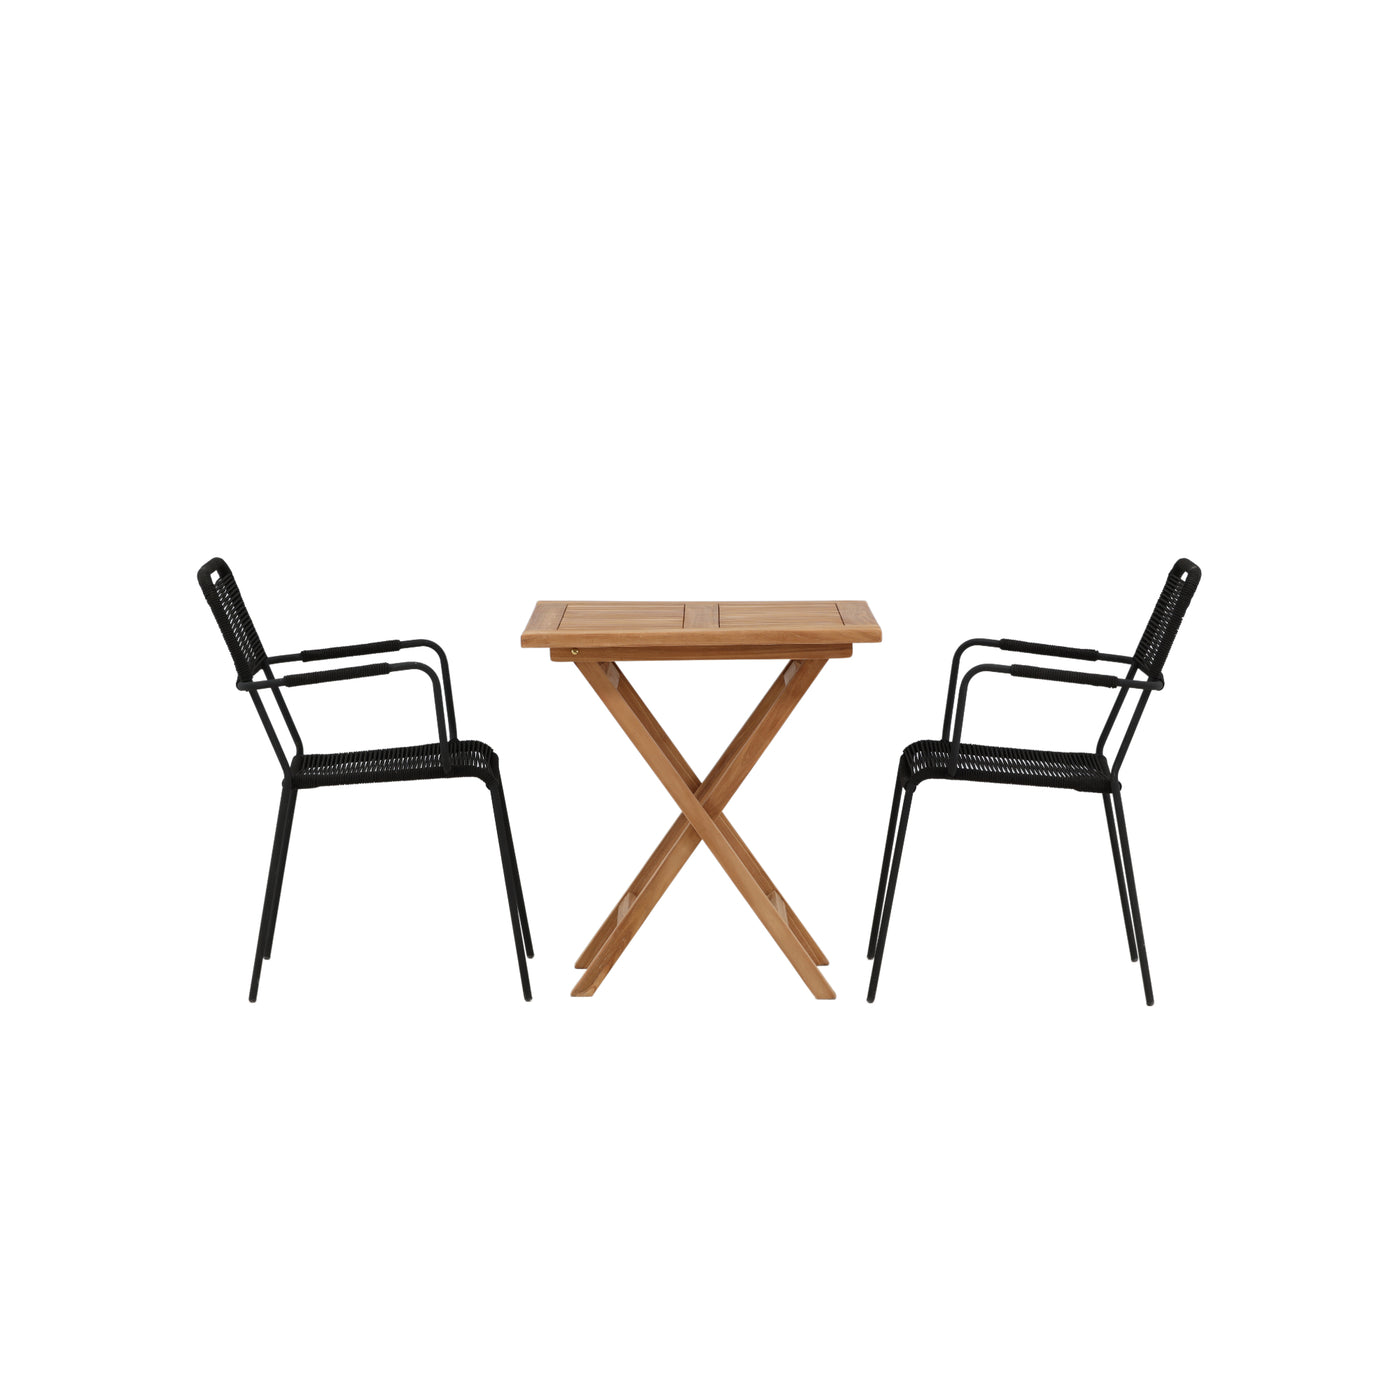 Yanjiao – Klapptisch – Natur – Teak – 70 x 70 cm _1 + Huauchinango-Sessel – schwarzes Alu / schwarzes Seil _2